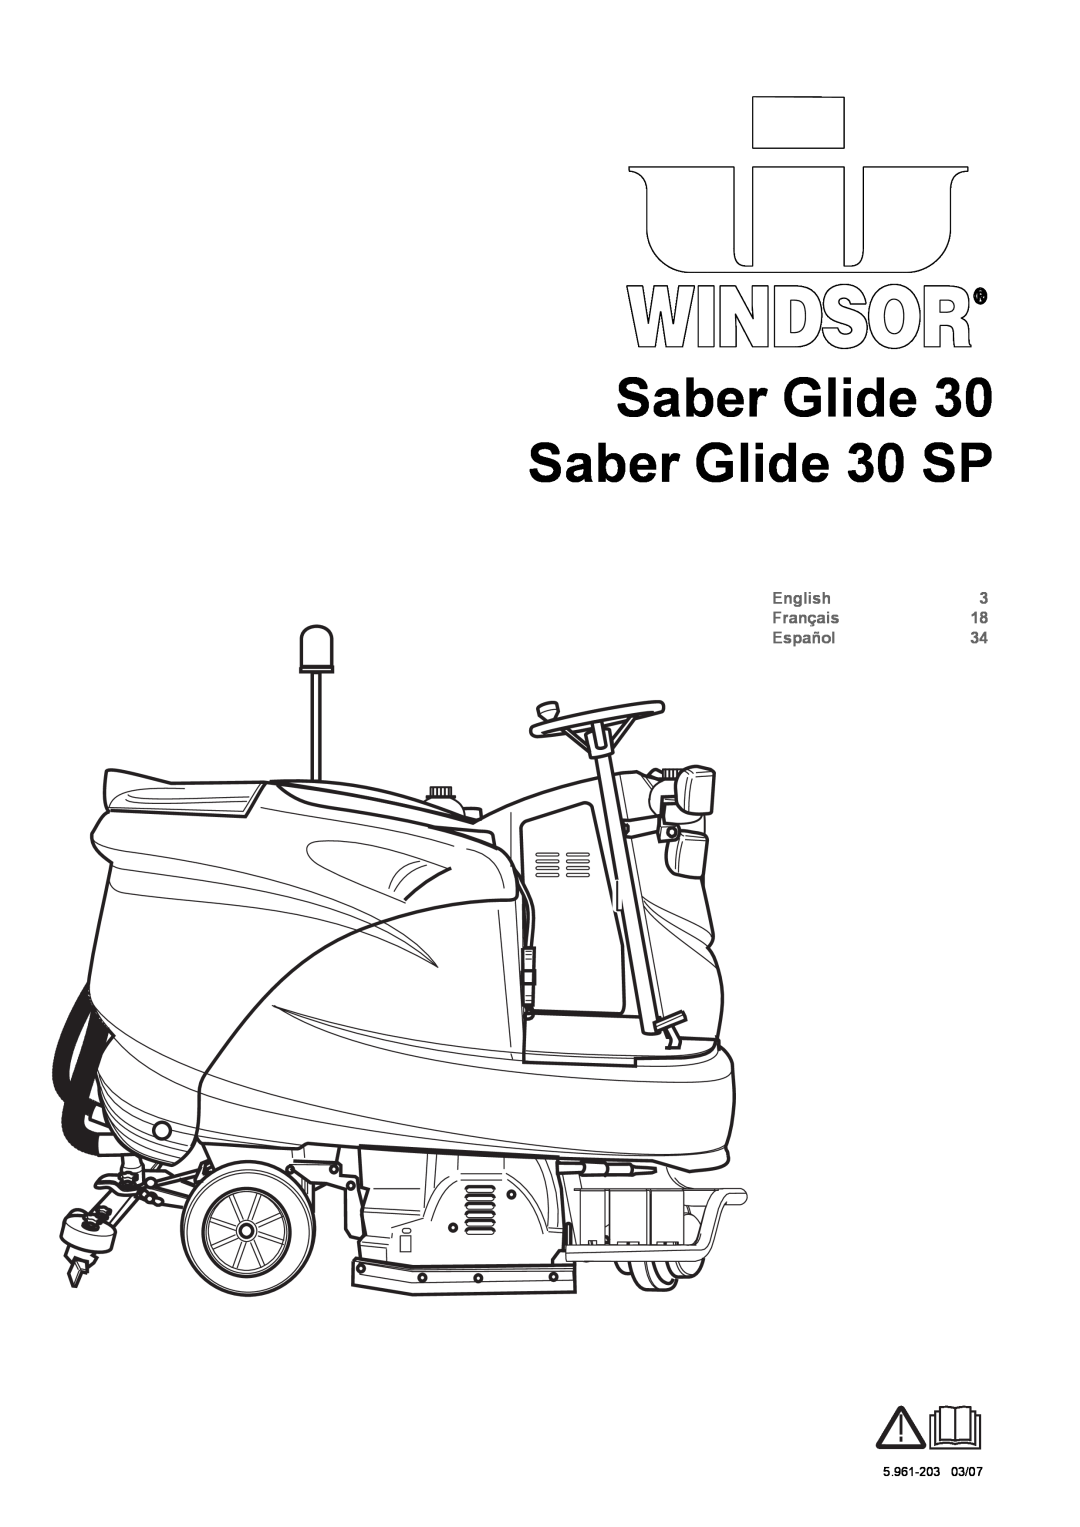 Windsor manual Saber Glide 30 Saber Glide 30 SP, English, Français, Español, 5.961-20303/07 